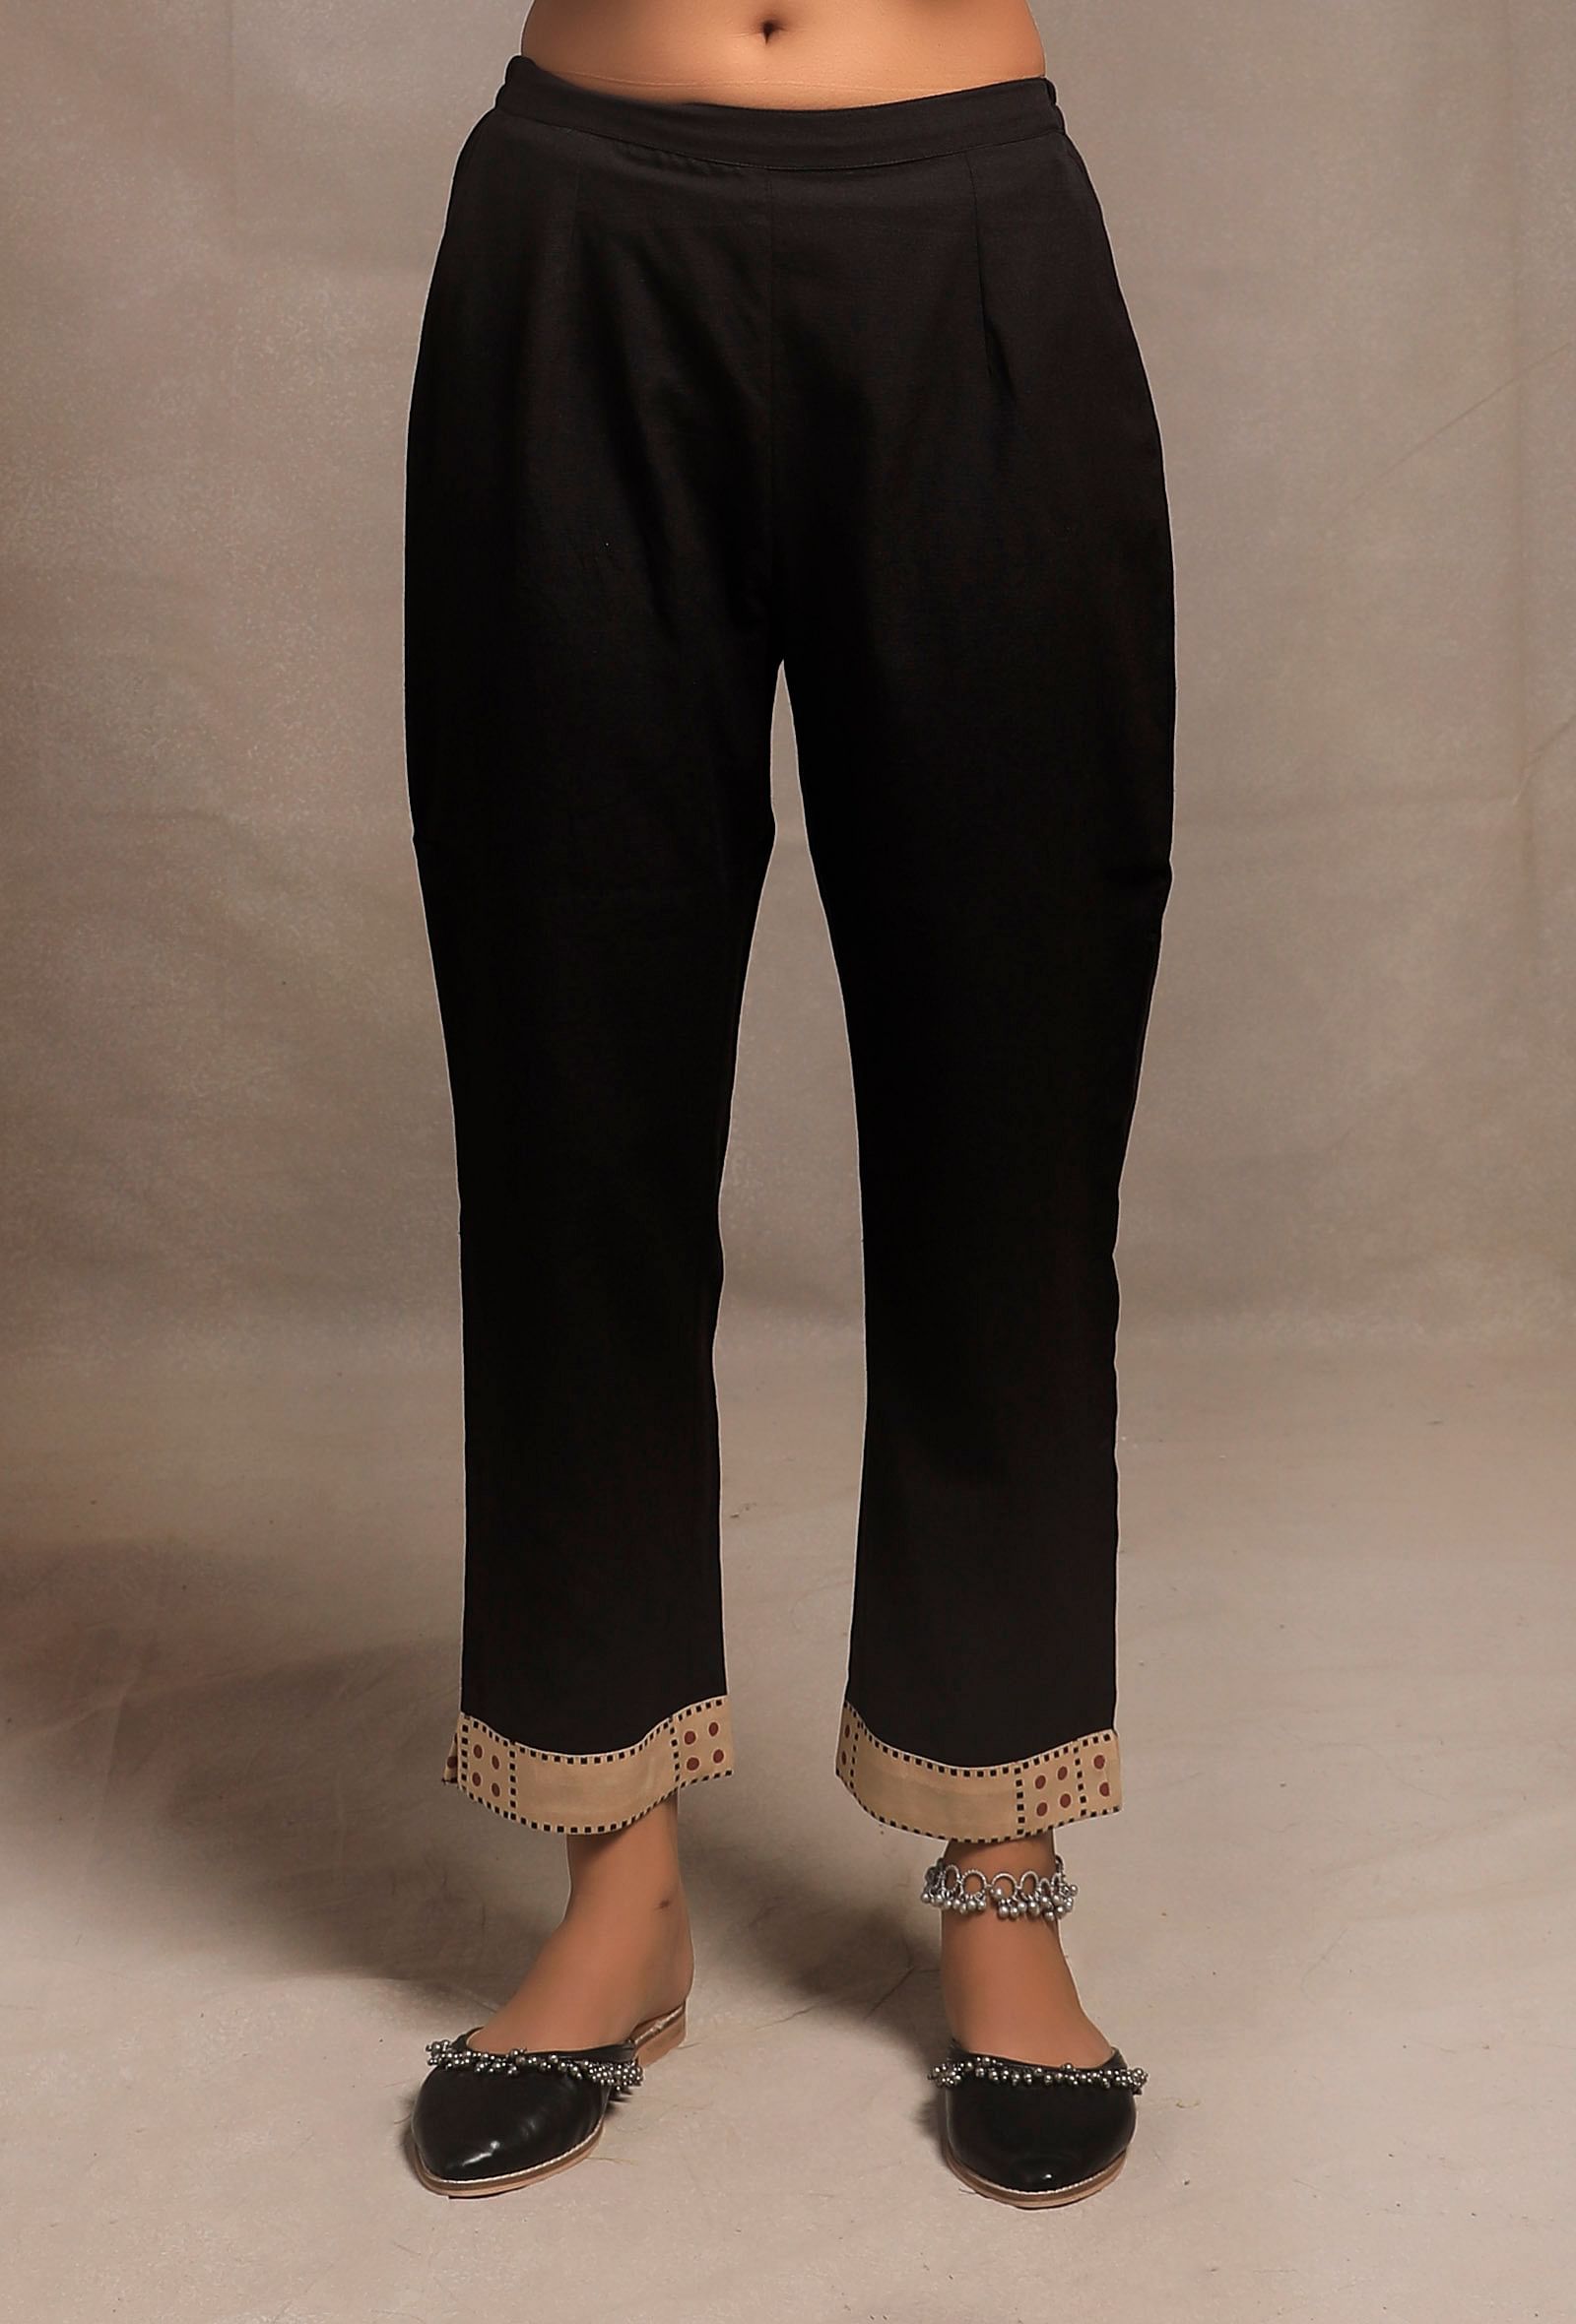 Black-Ecru Contrast Straight Narrow Fit Pants